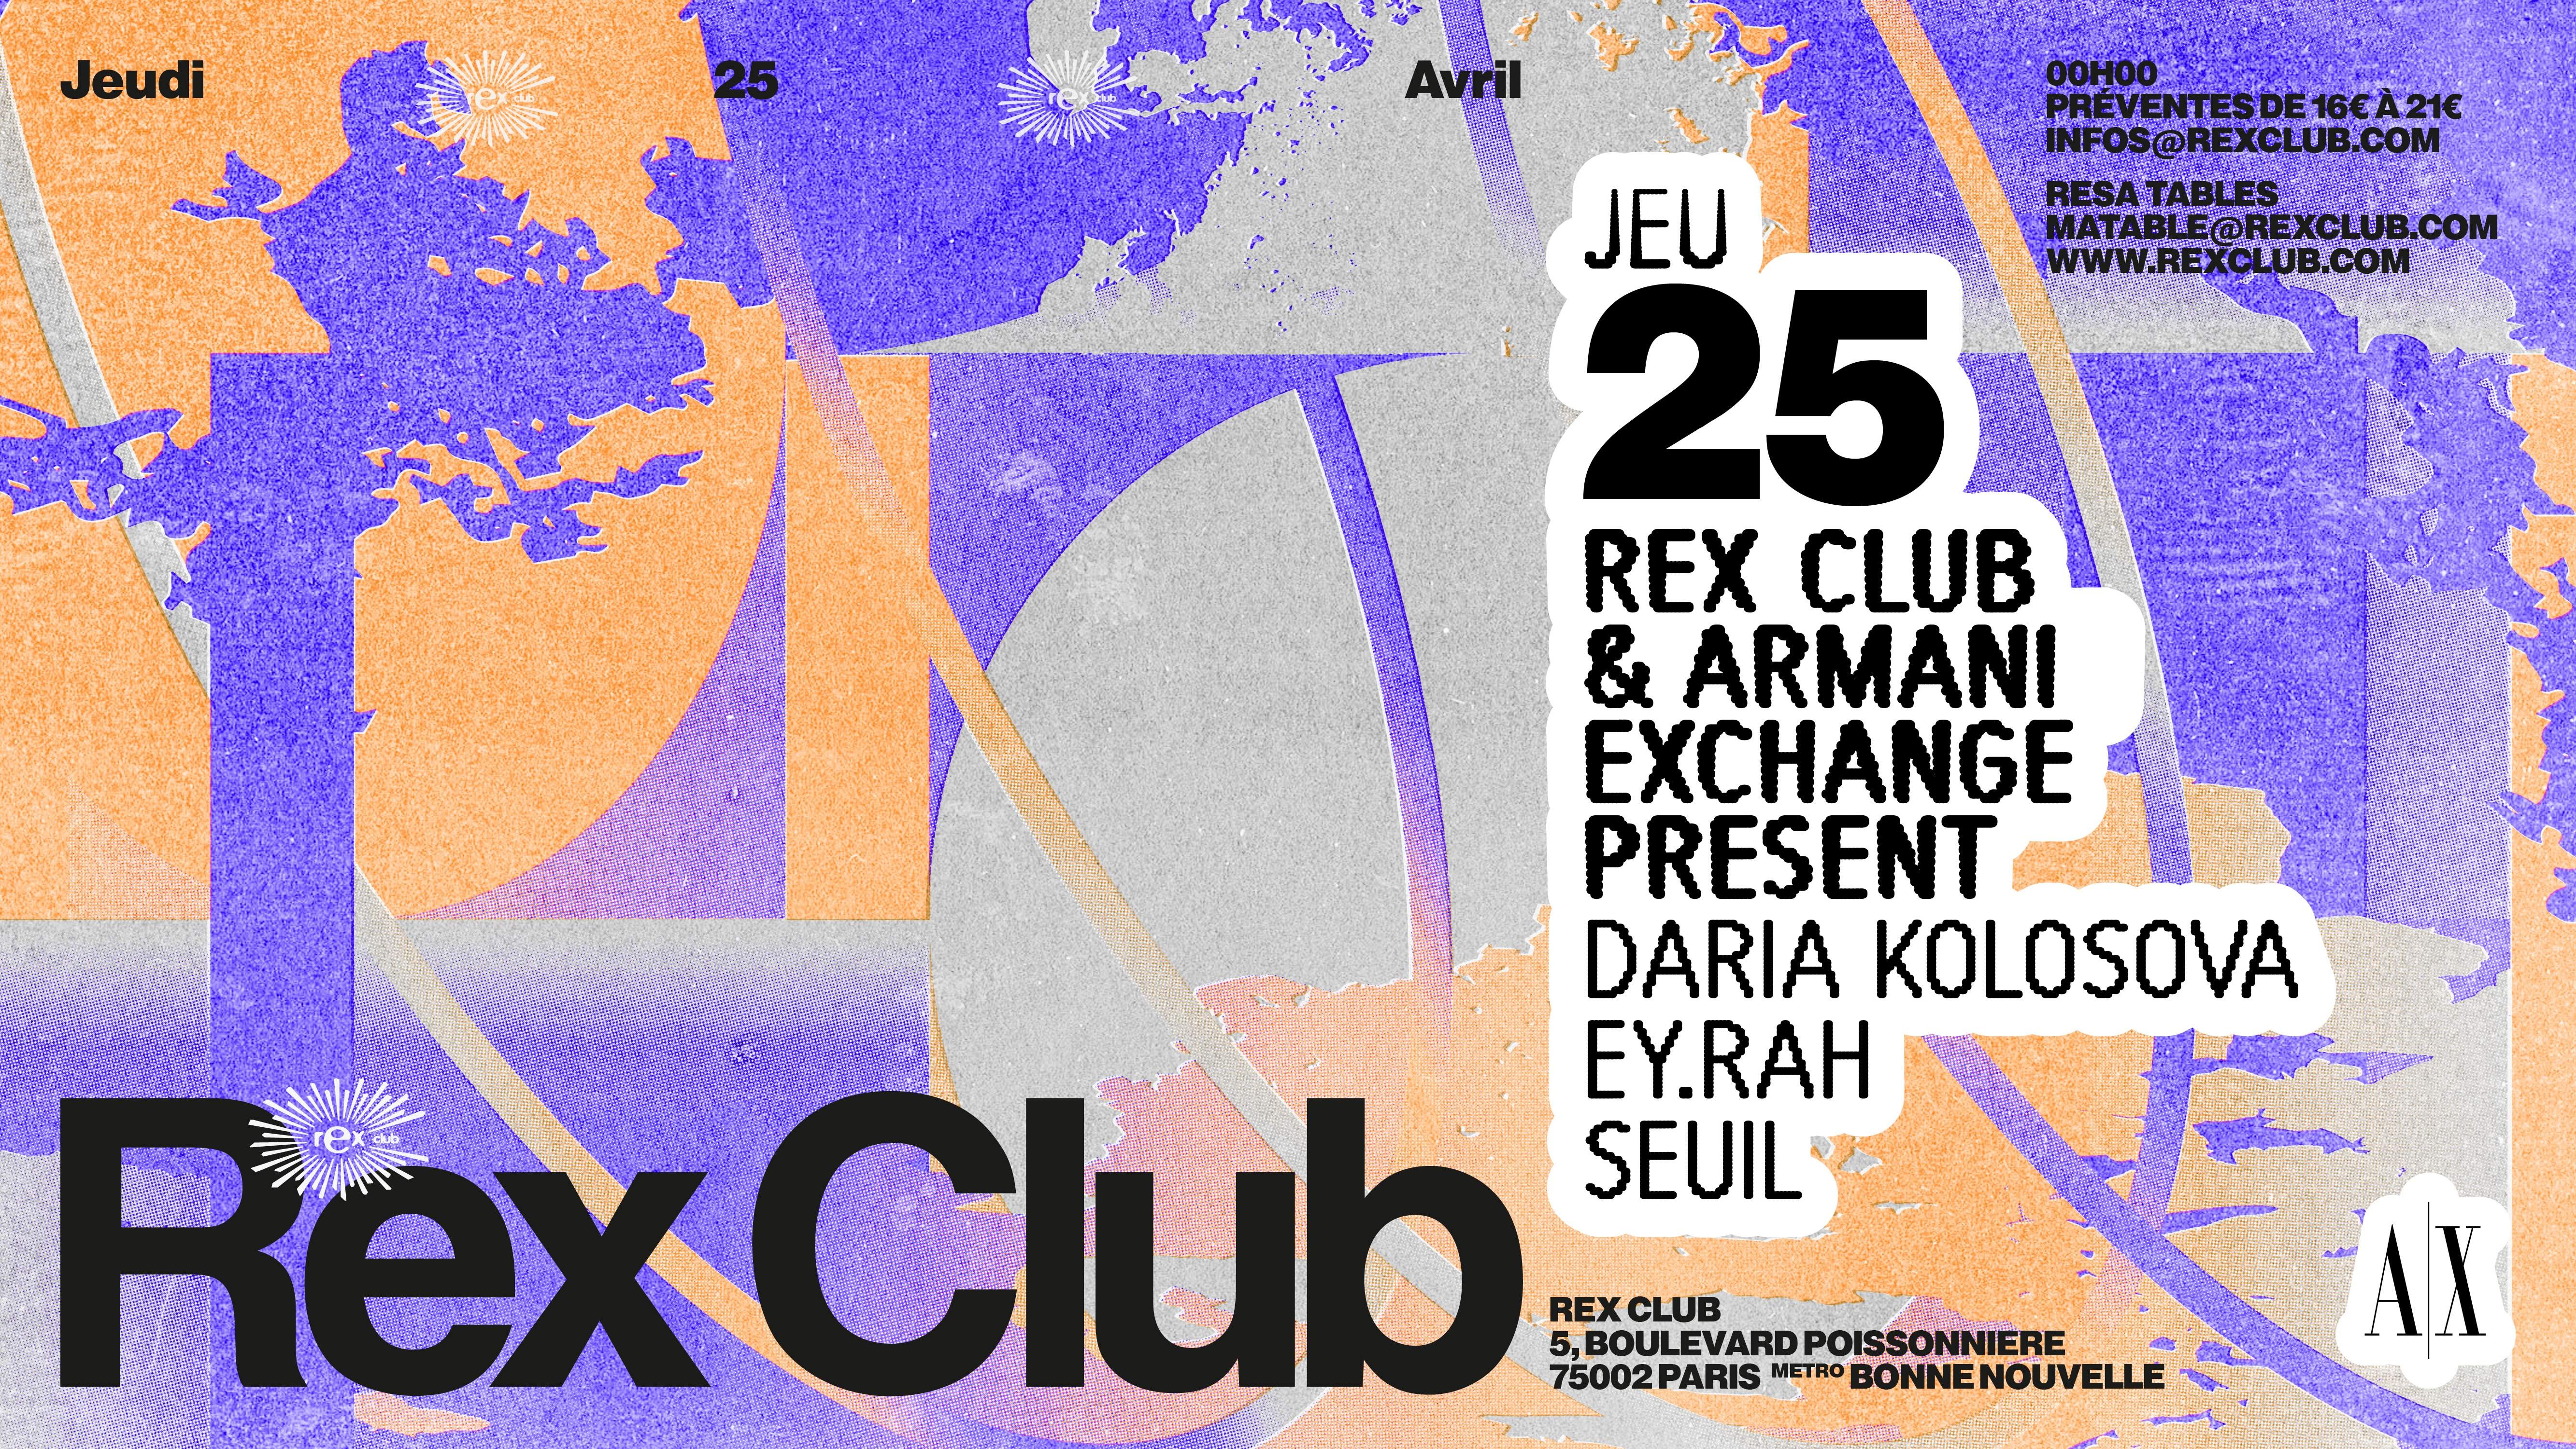 Rex Club & Armani Exchange present: Daria Kolosova, Ey.rah, Seuil - フライヤー表